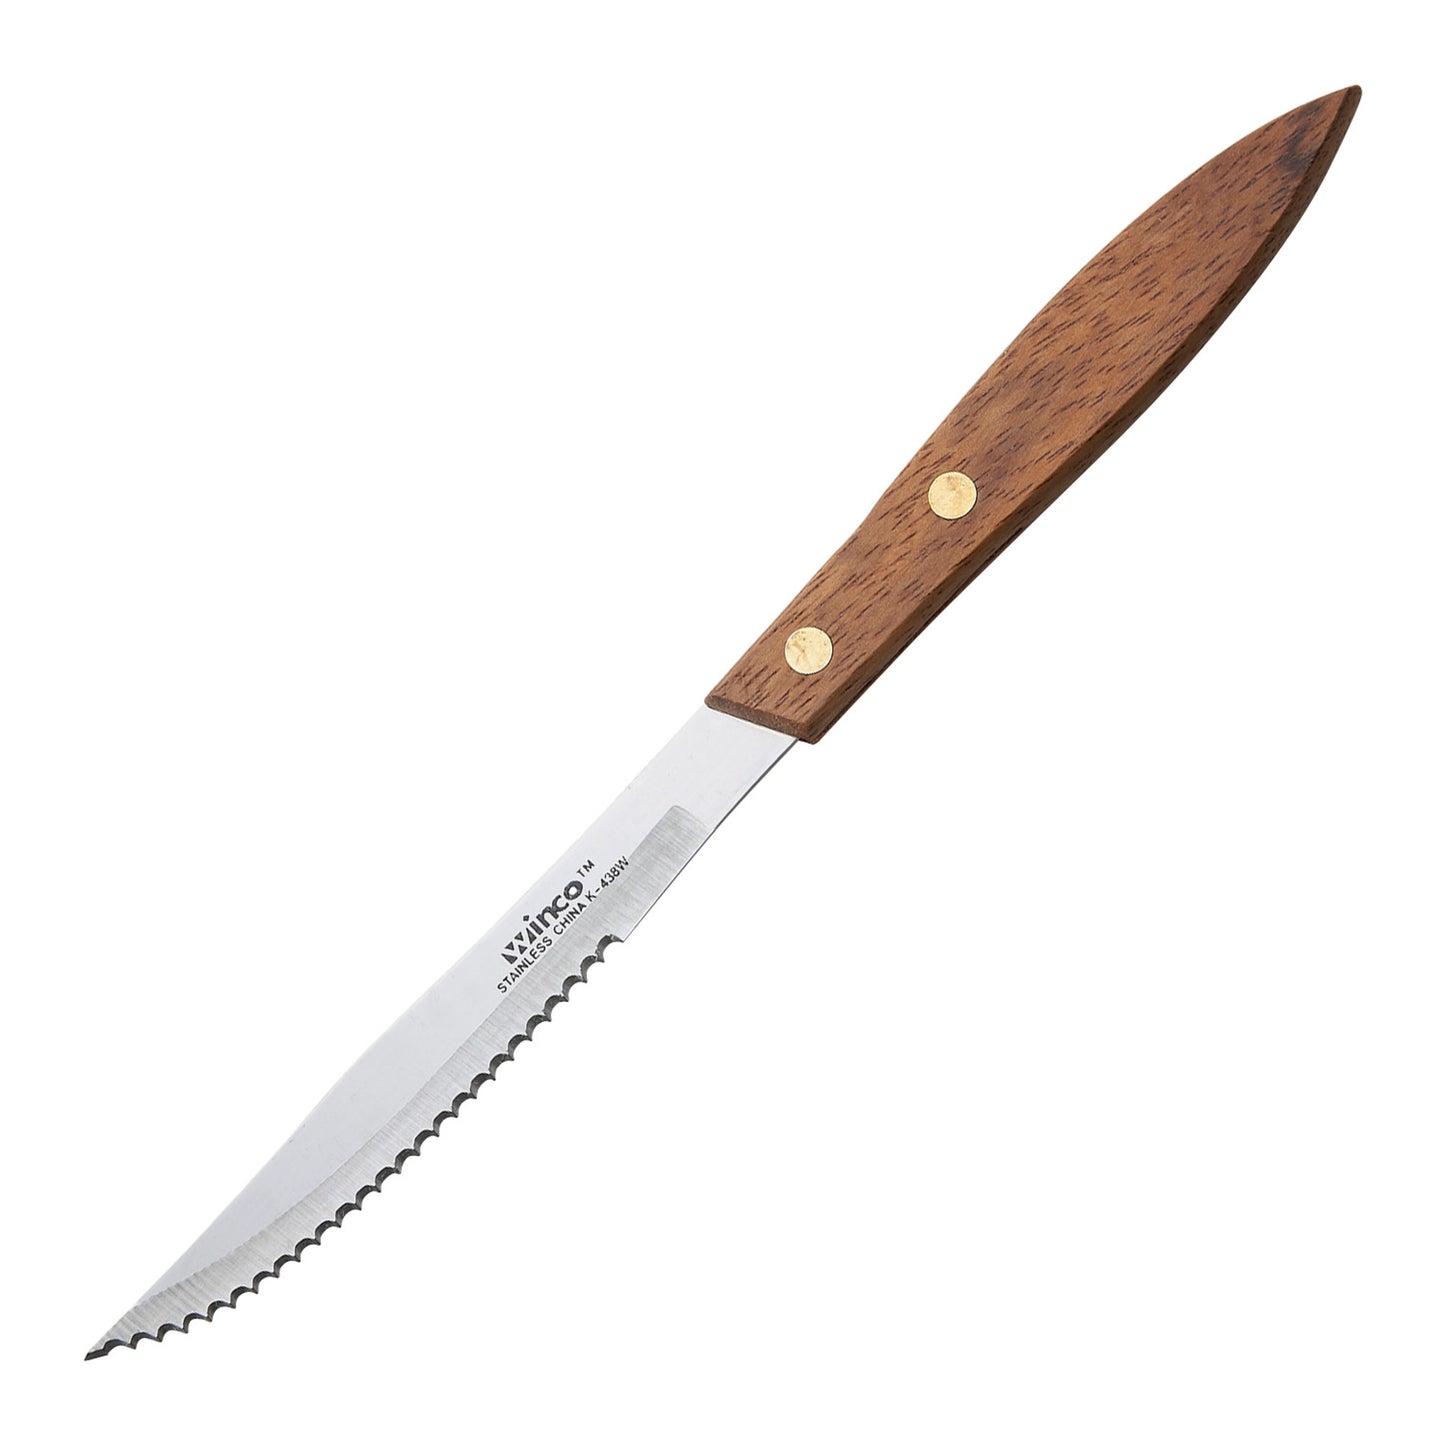 K-438W - Steak Knives, 4-3/8" Blade, Wooden Handle, Pointed Tip & Handle